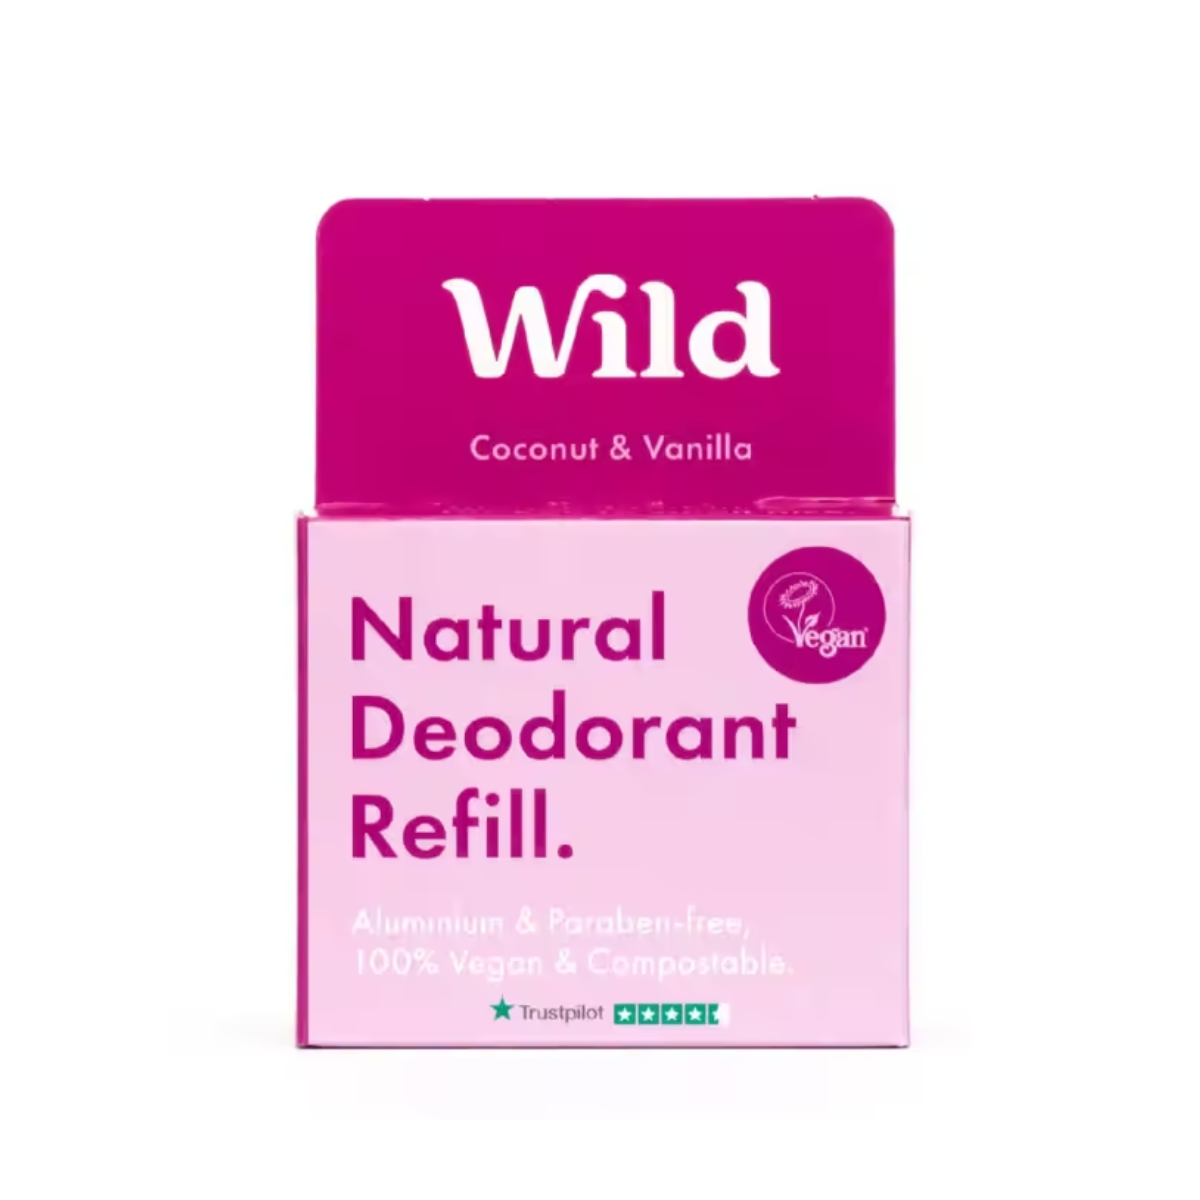 WILD Coconut Dreams Deodorant Refill